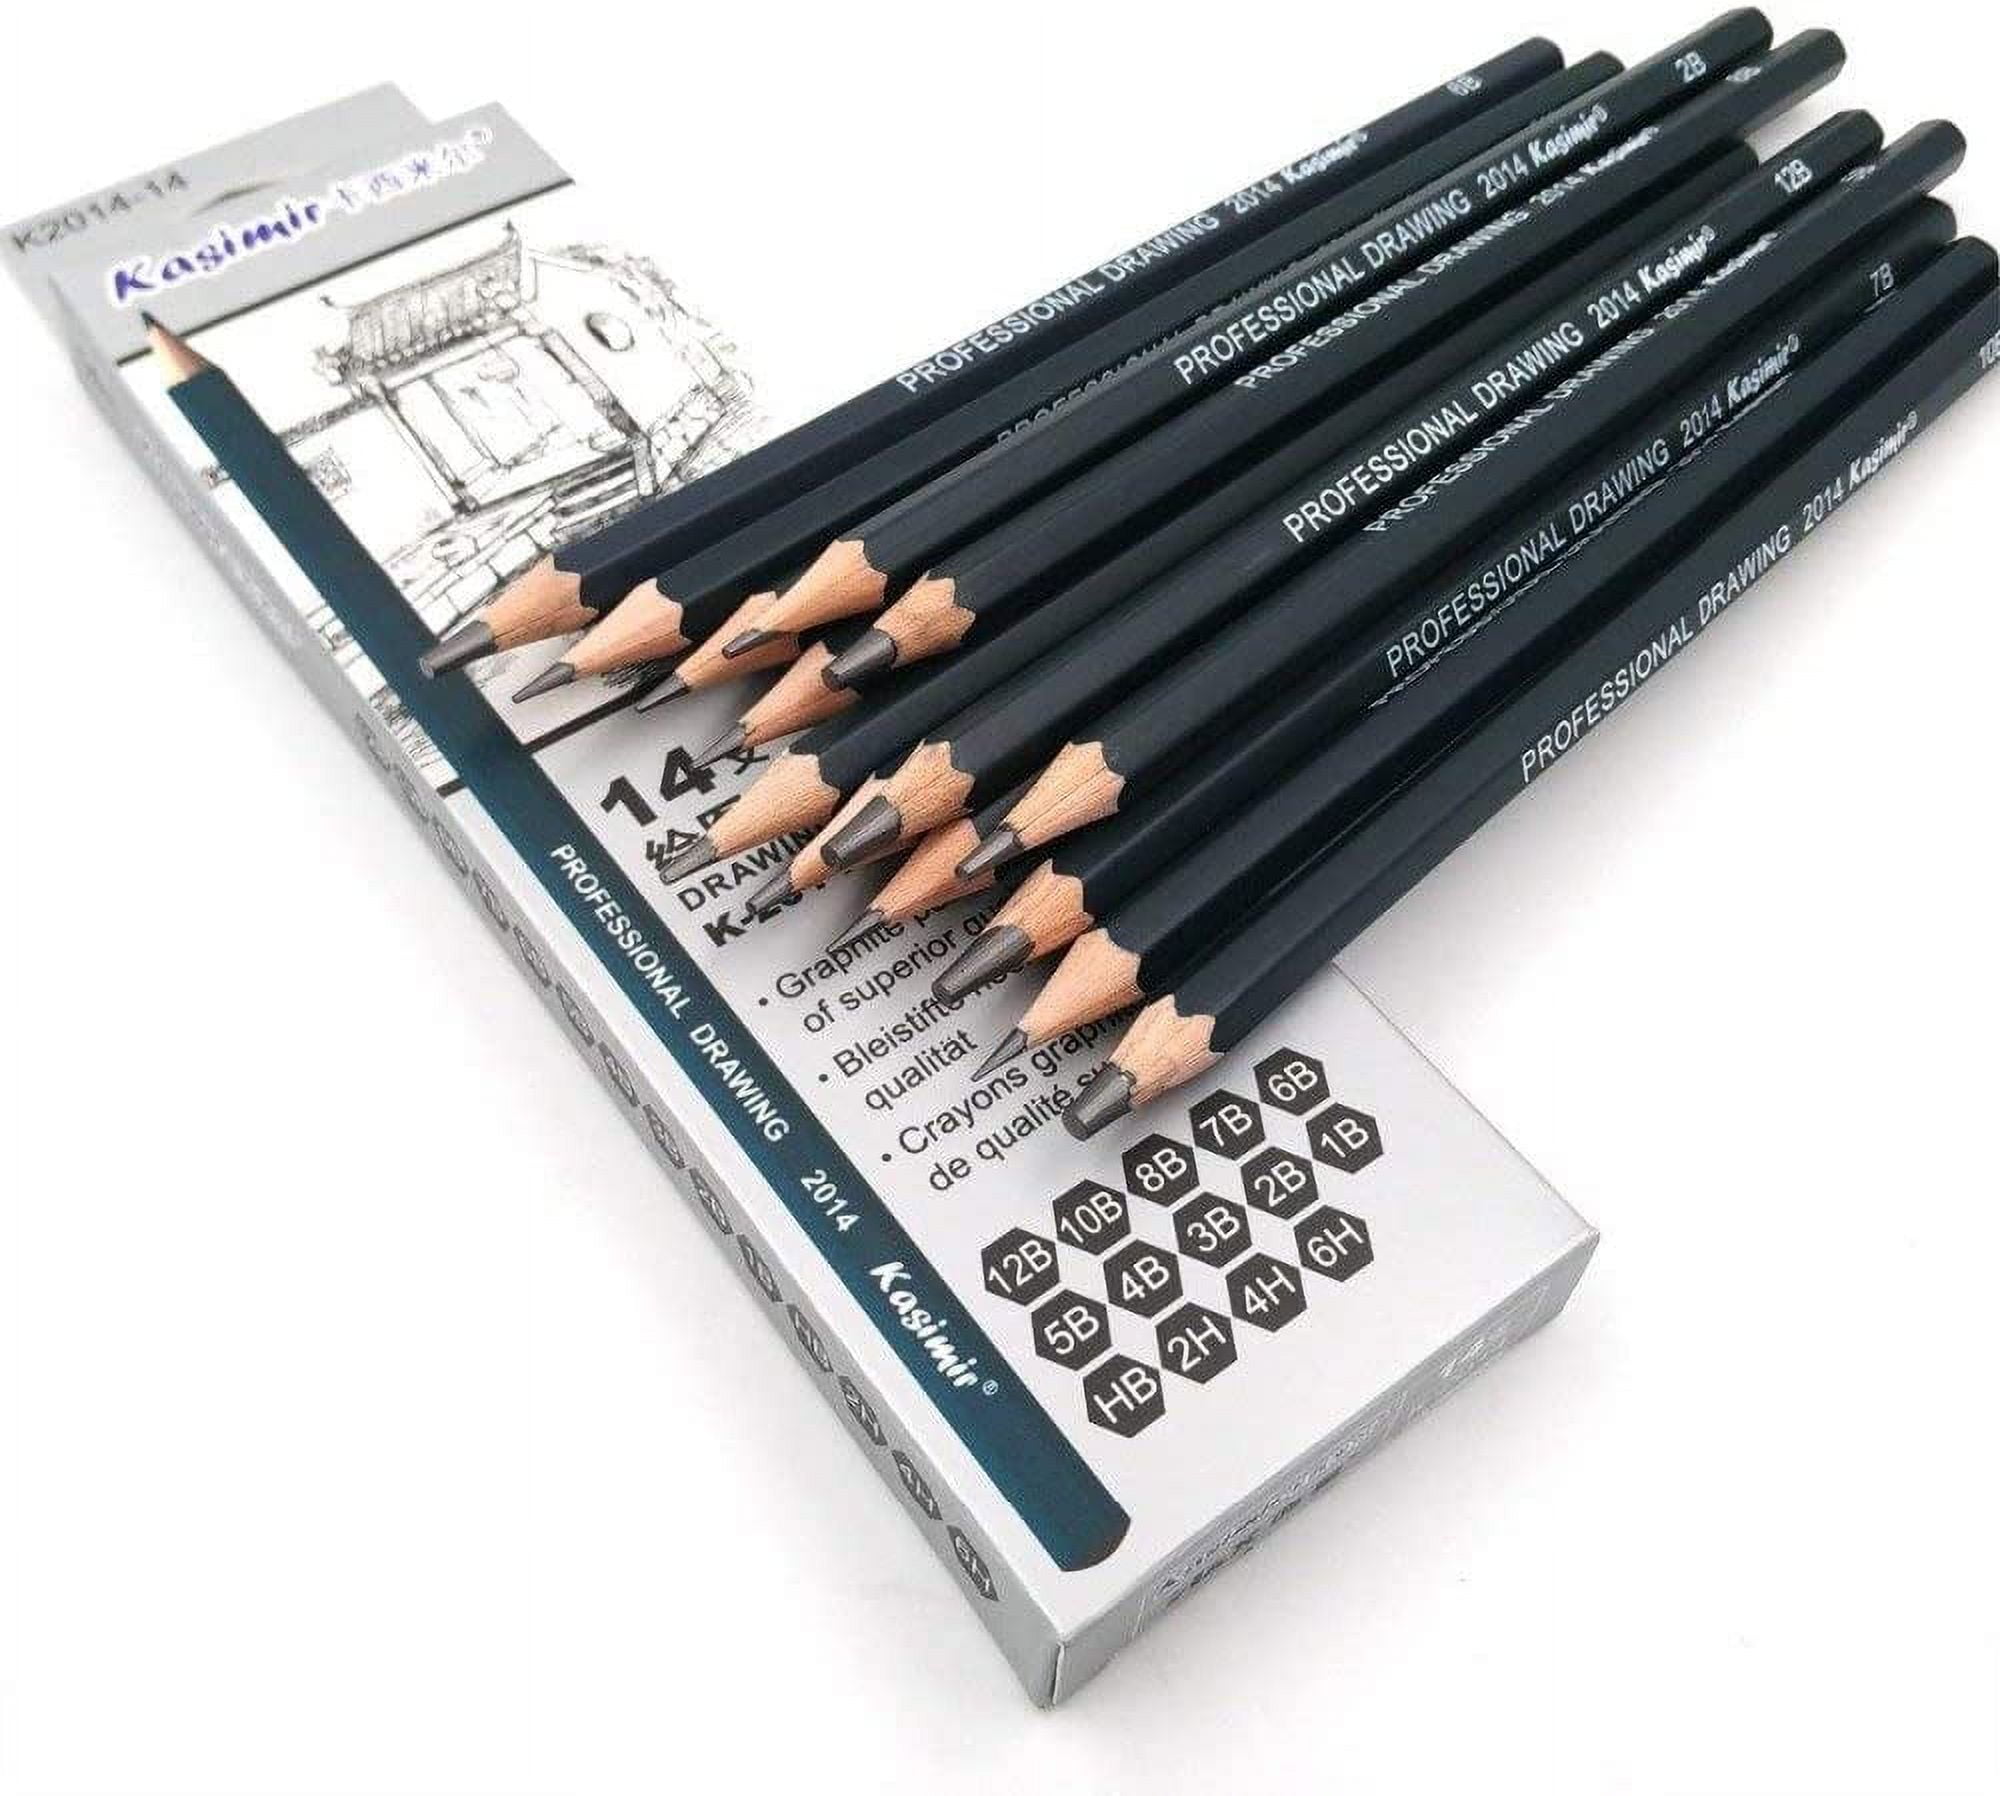  Bomybaw Drawing and Sketching Colored Pencils Set